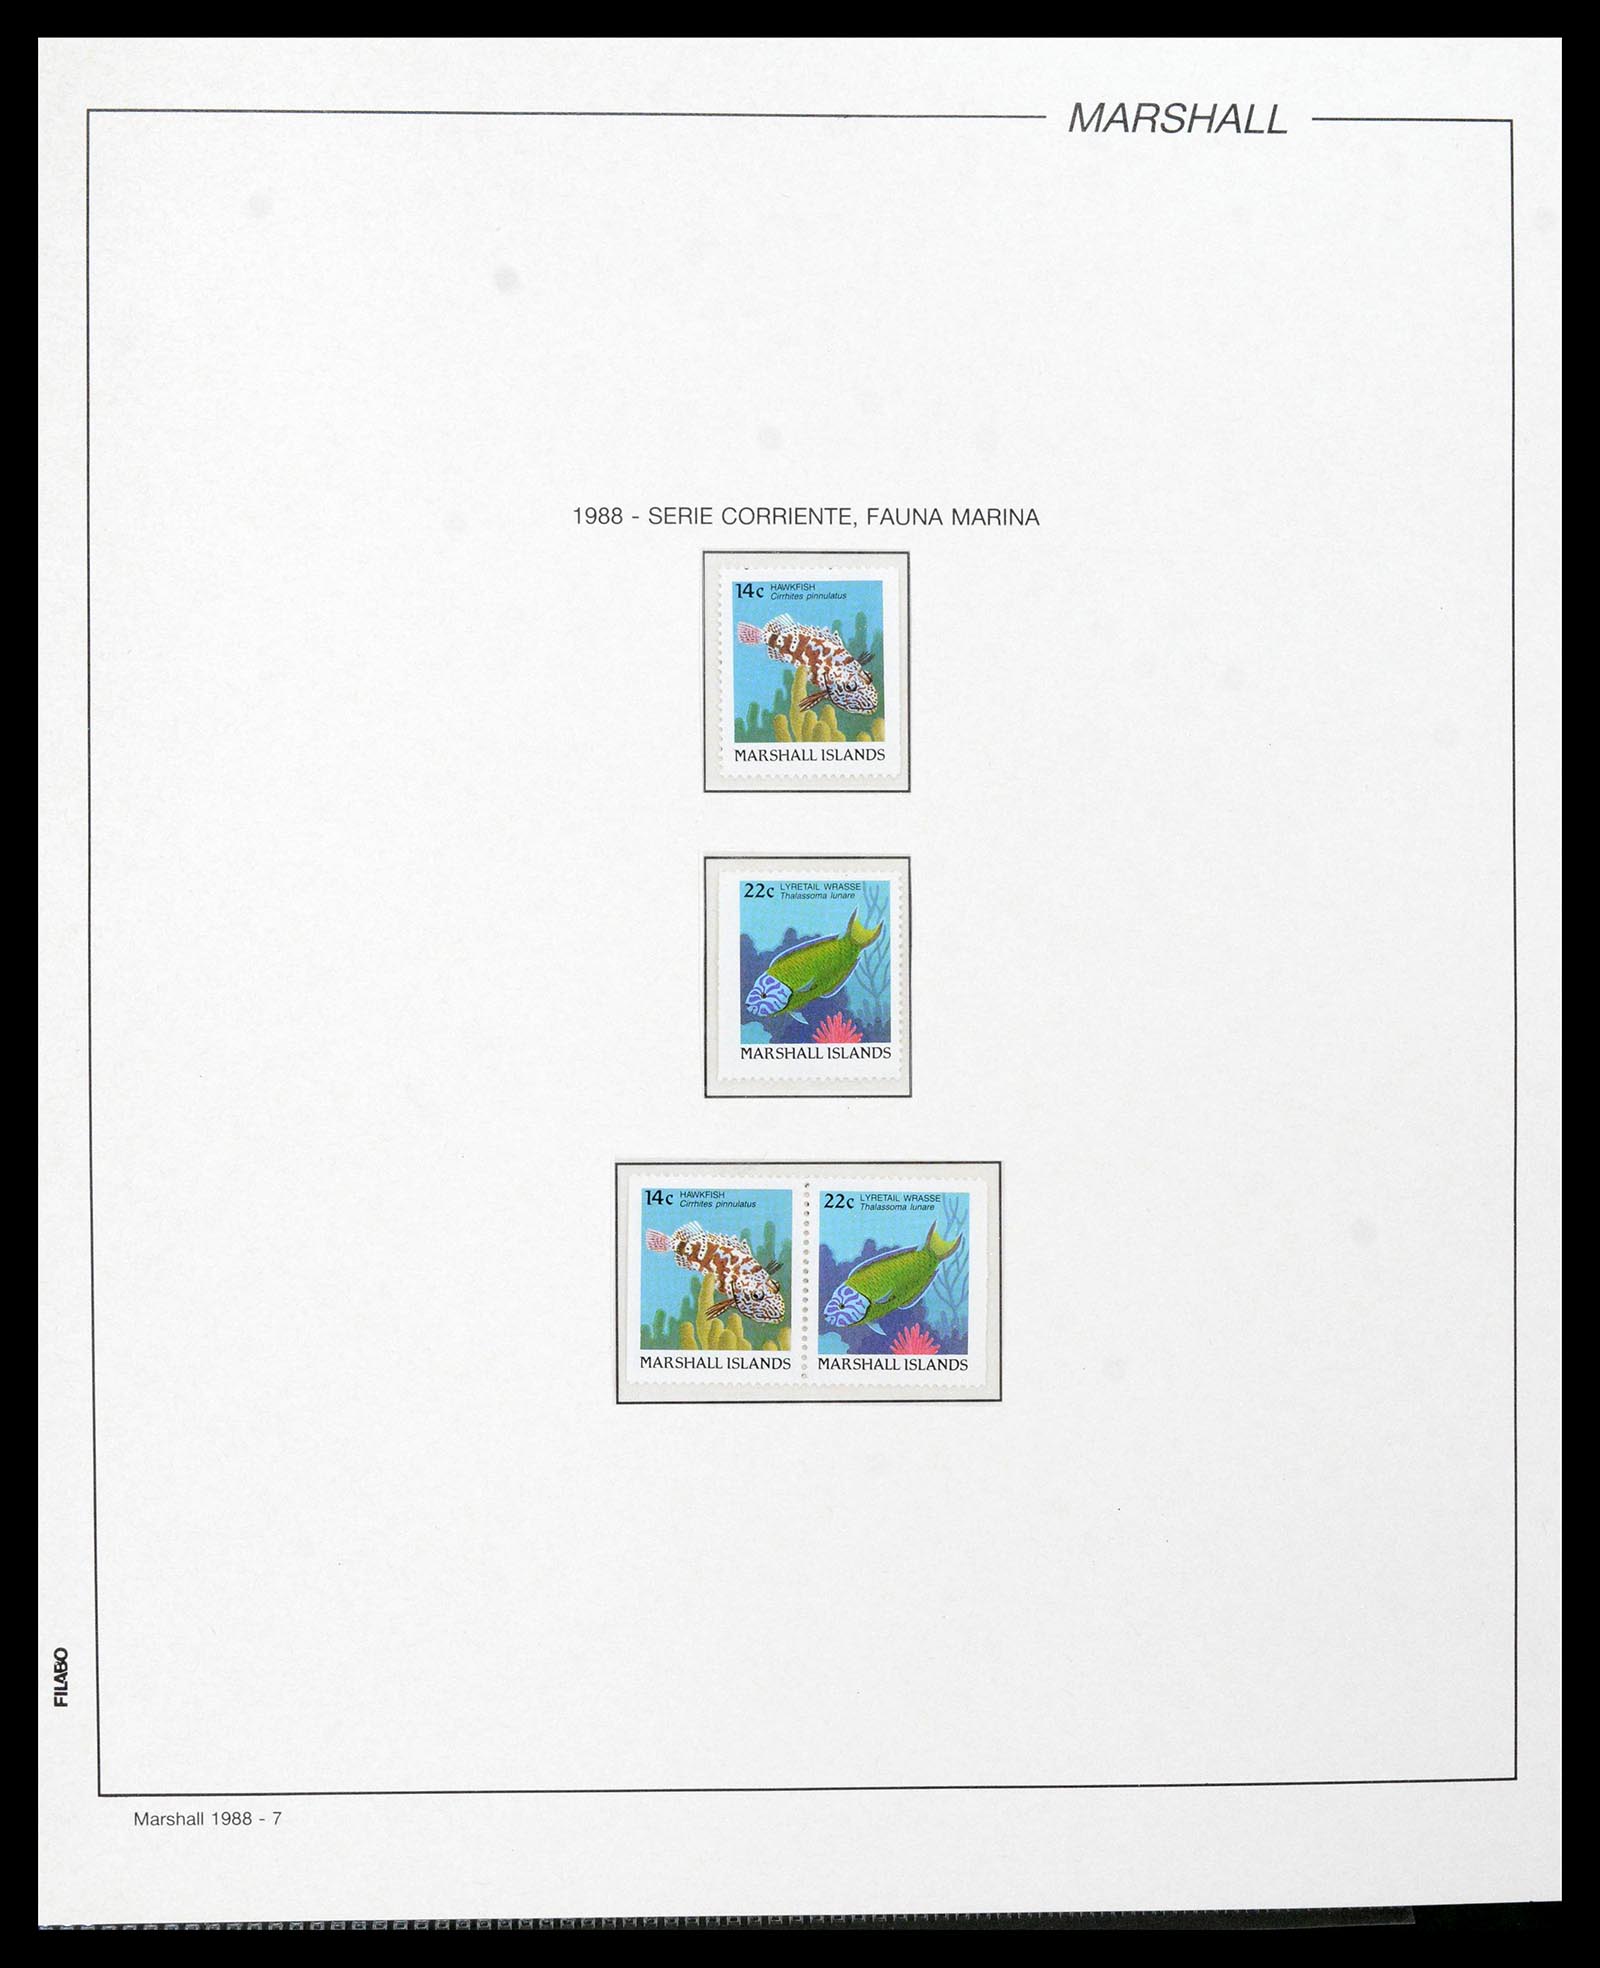 39222 0134 - Stamp collection 39222 Palau, Micronesia and Marshall islands 1980-1995.